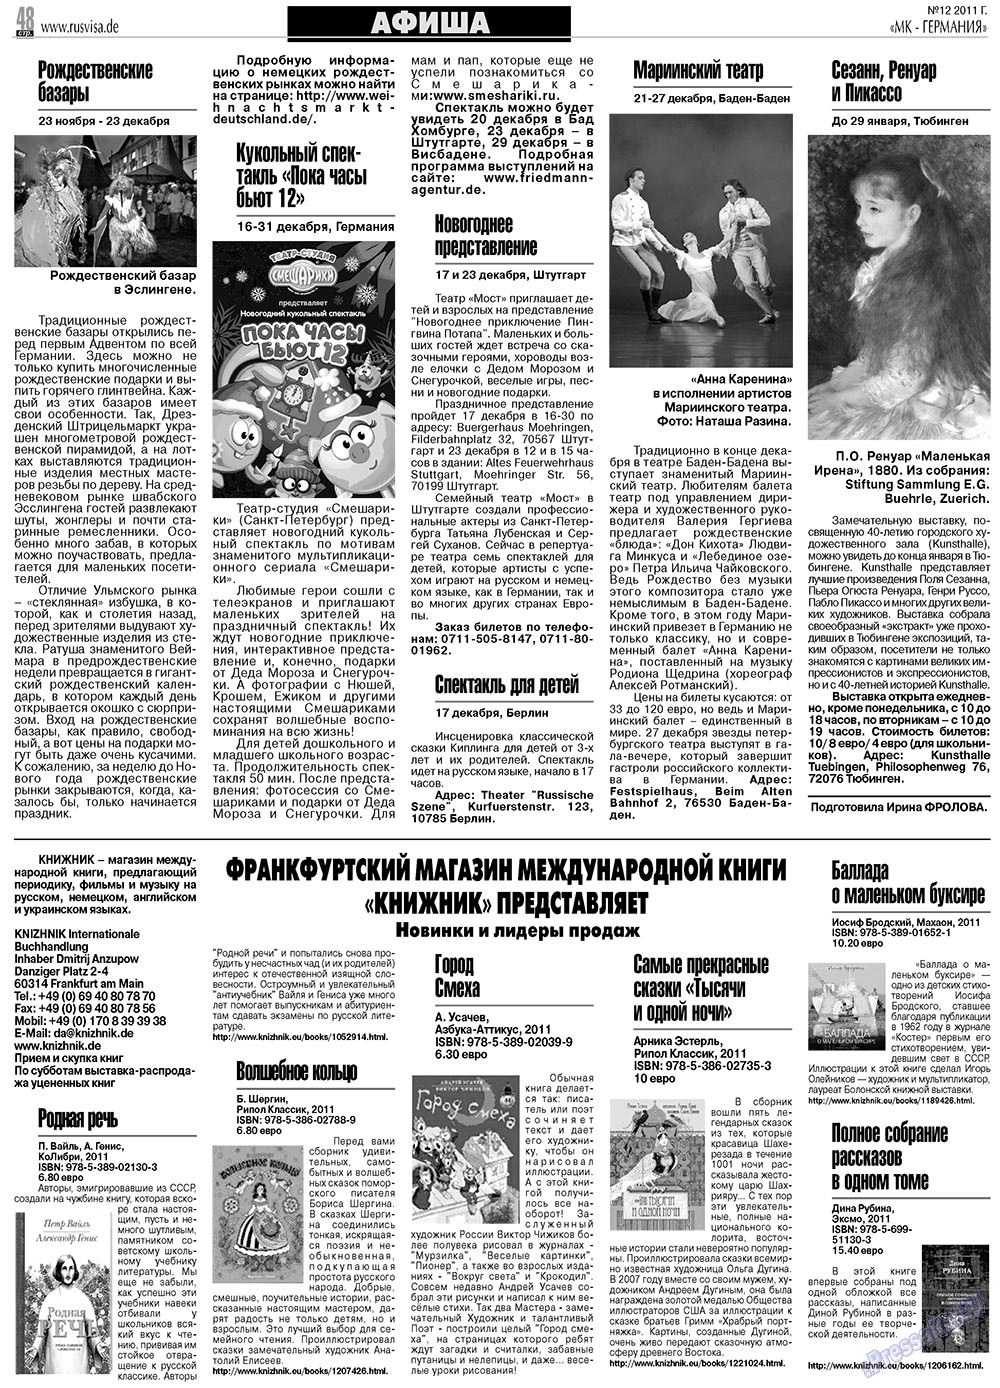 МК-Германия планета мнений, газета. 2011 №12 стр.48